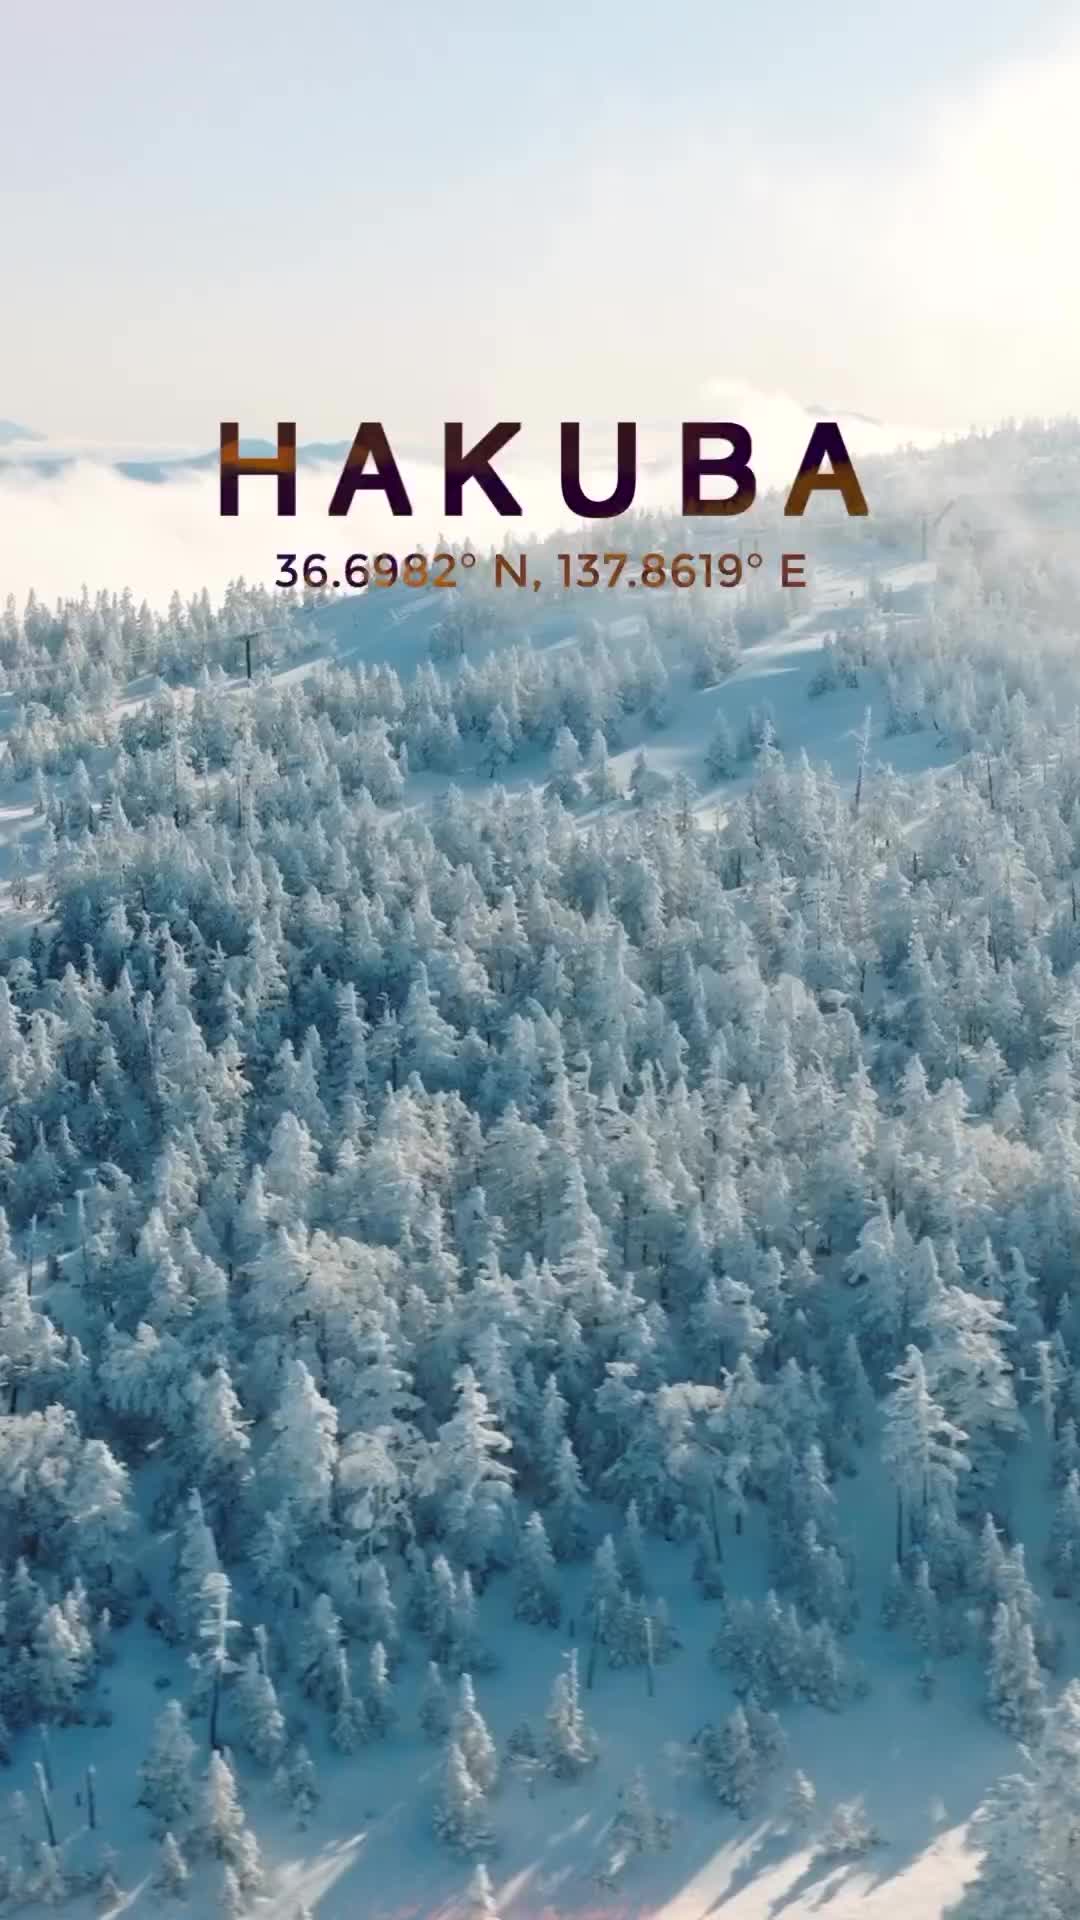 Hakuba Ski Fields: Japan's Winter Wonderland